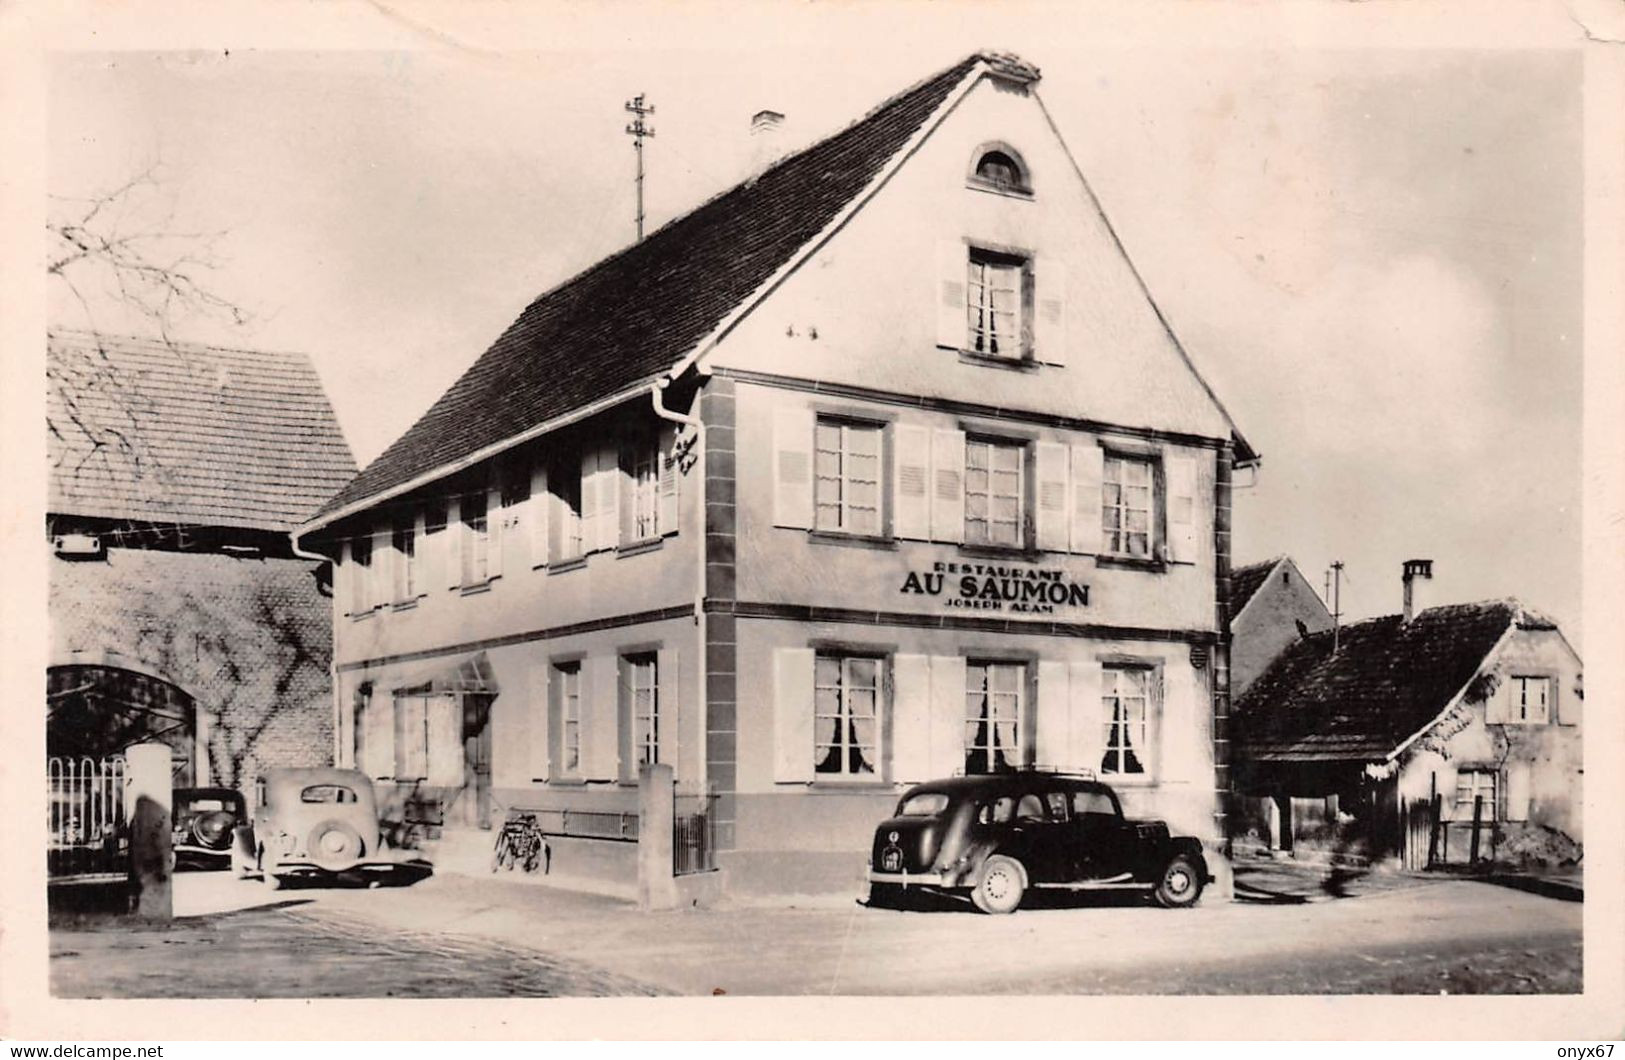 LA WANTZENAU Près STRASBOURG-ROBERTSAU-67-Bas-Rhin-Restaurant Au Saumon Joseph ADAM-Voiture-Automobile-AUTO Traction - Strasbourg